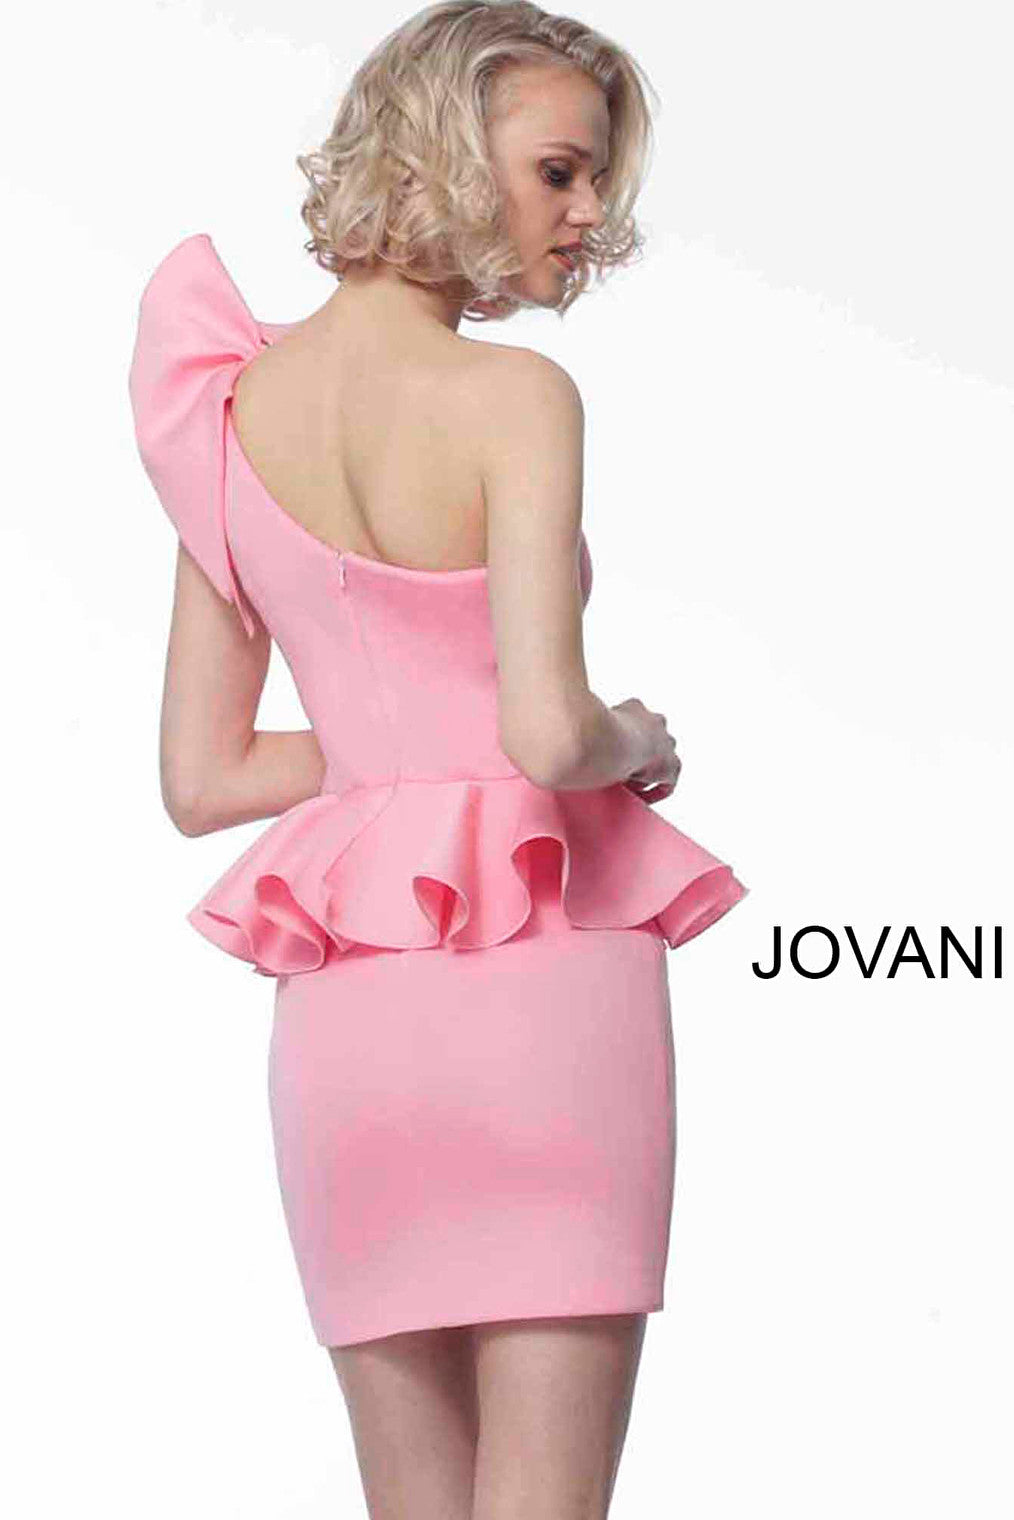 Jovani pink frill short cocktail dress 1400